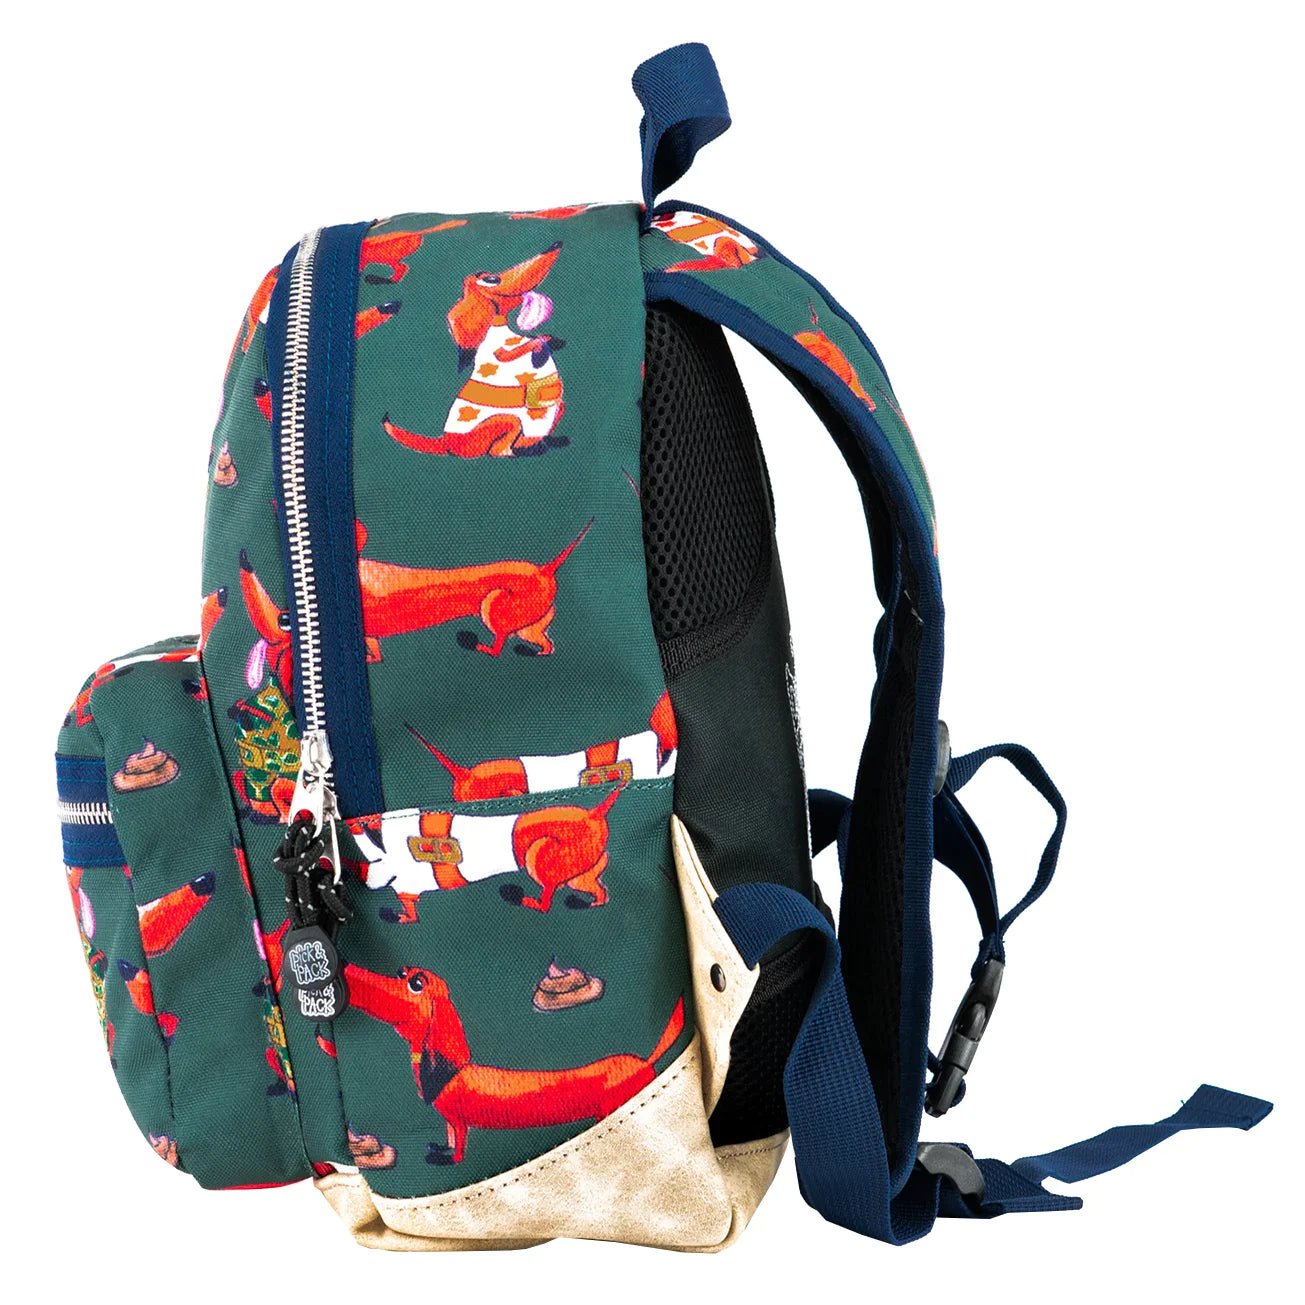 Pick & Pack Vienna children's backpack 31 cm - Leaf Green